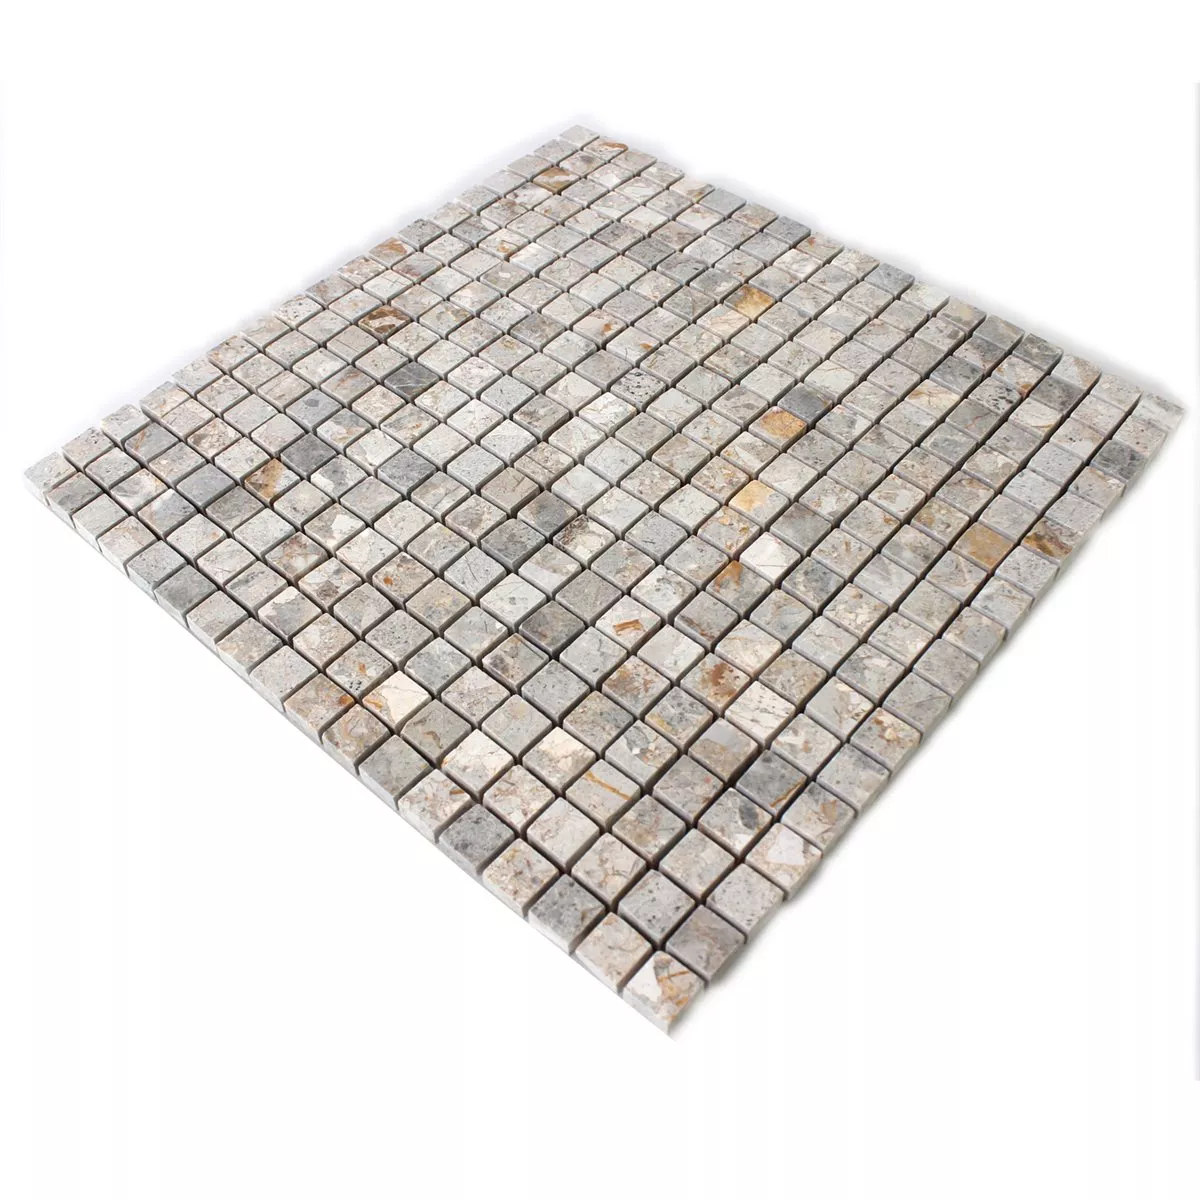 Sample Mosaic Tiles Natural Stone Marron Gold Polished